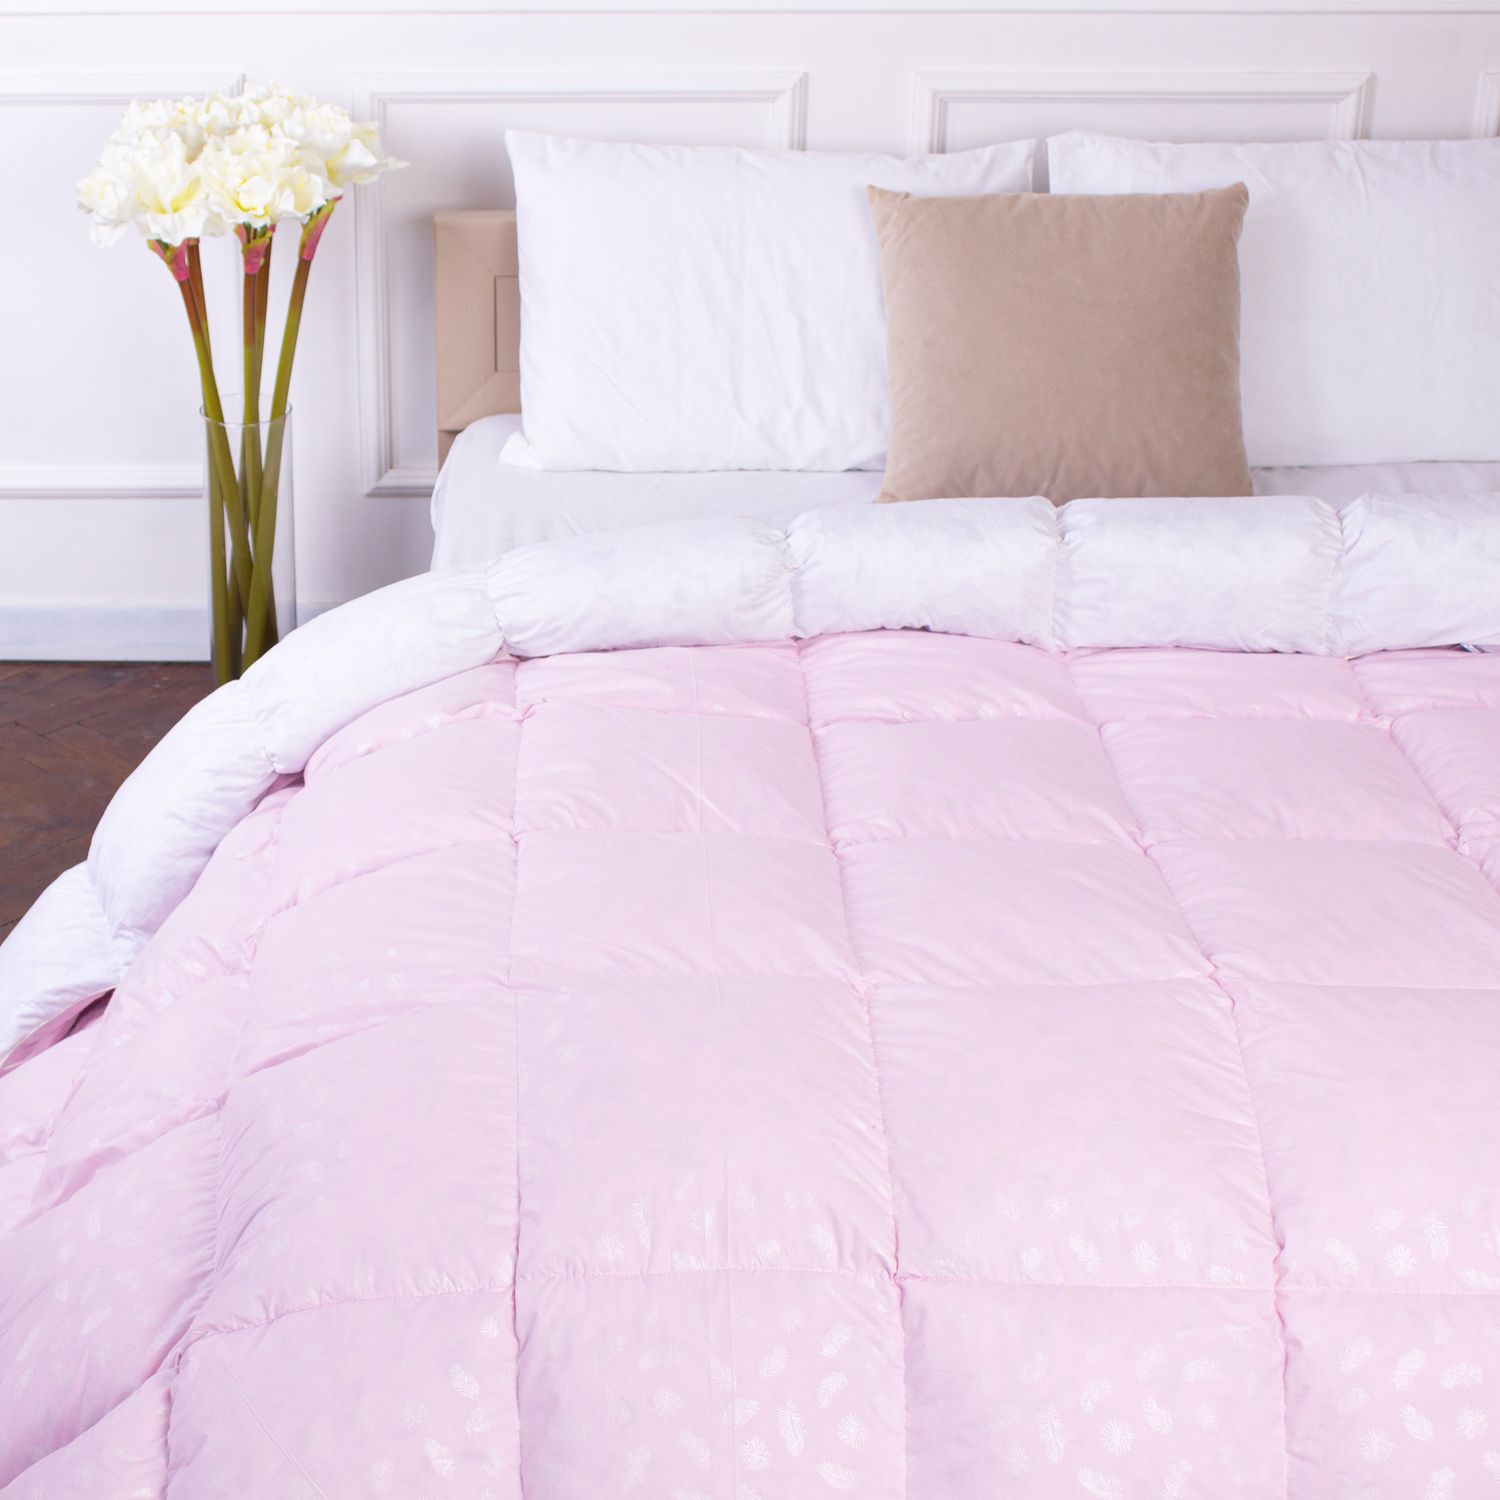 Одеяло пуховое MirSon Karmen №1862 Bio-Pink, 50% пух, евростандарт, 220x200, розовое (2200003014921) - фото 4